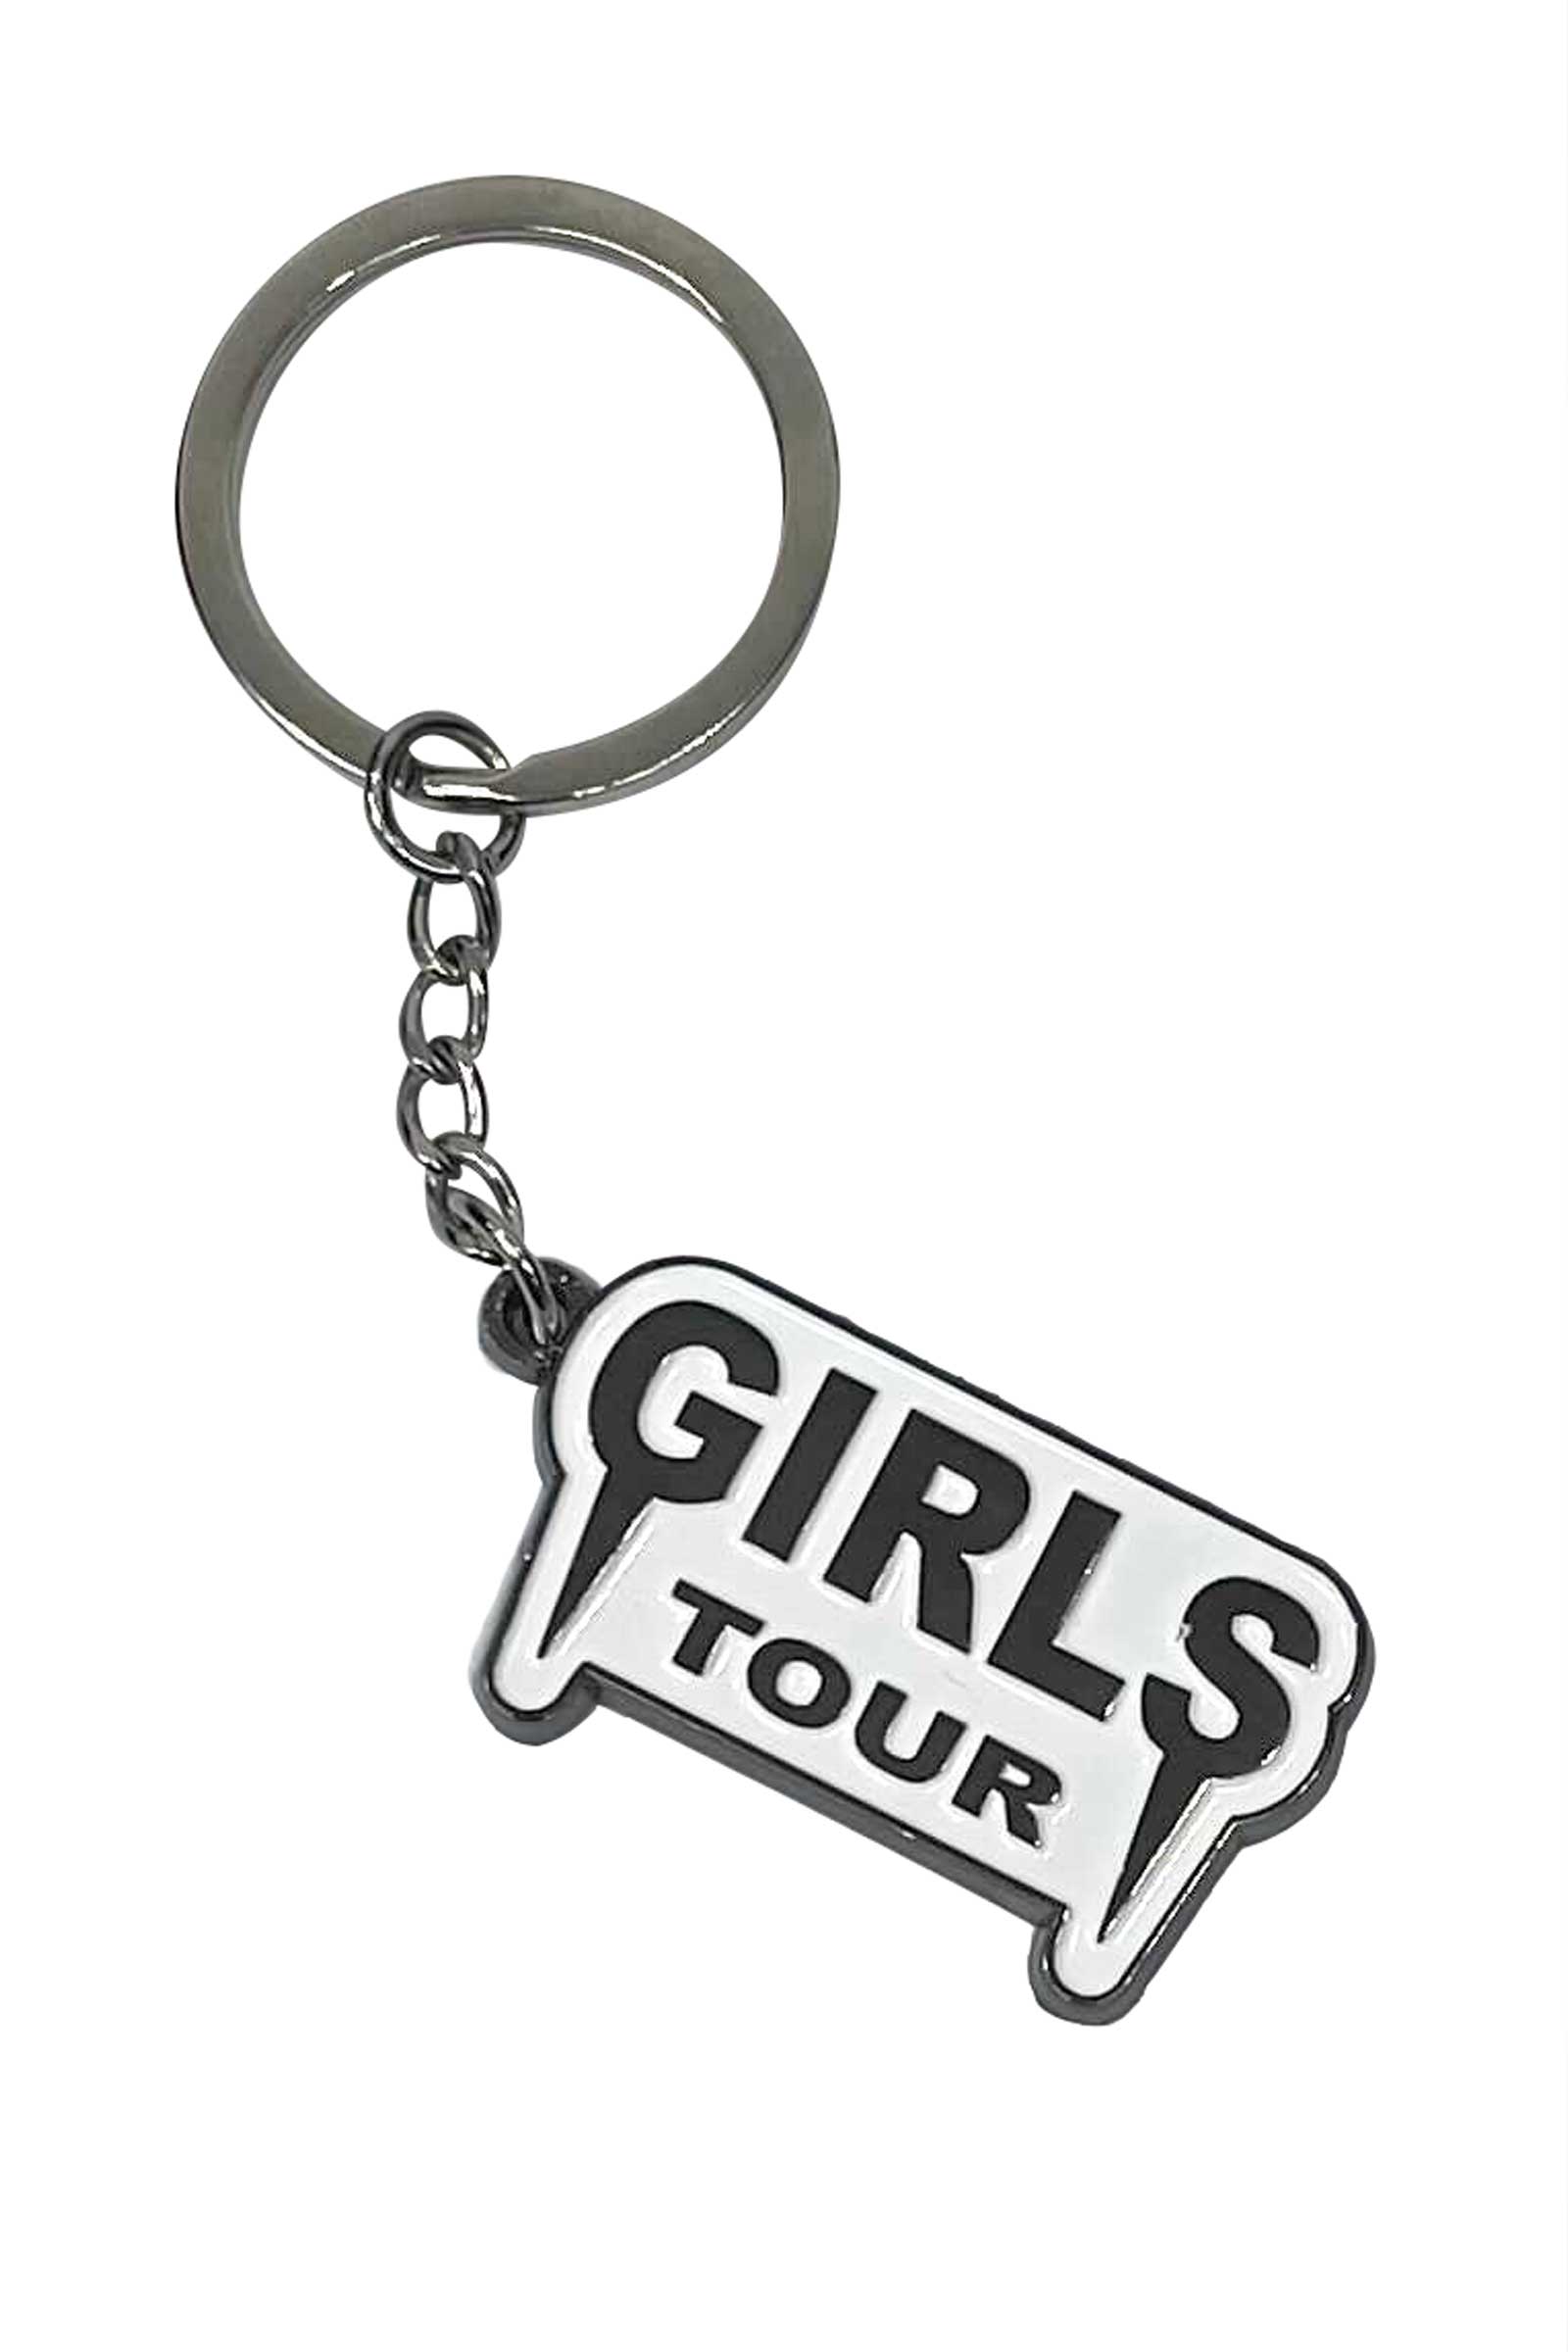 Girls tour Key Chain